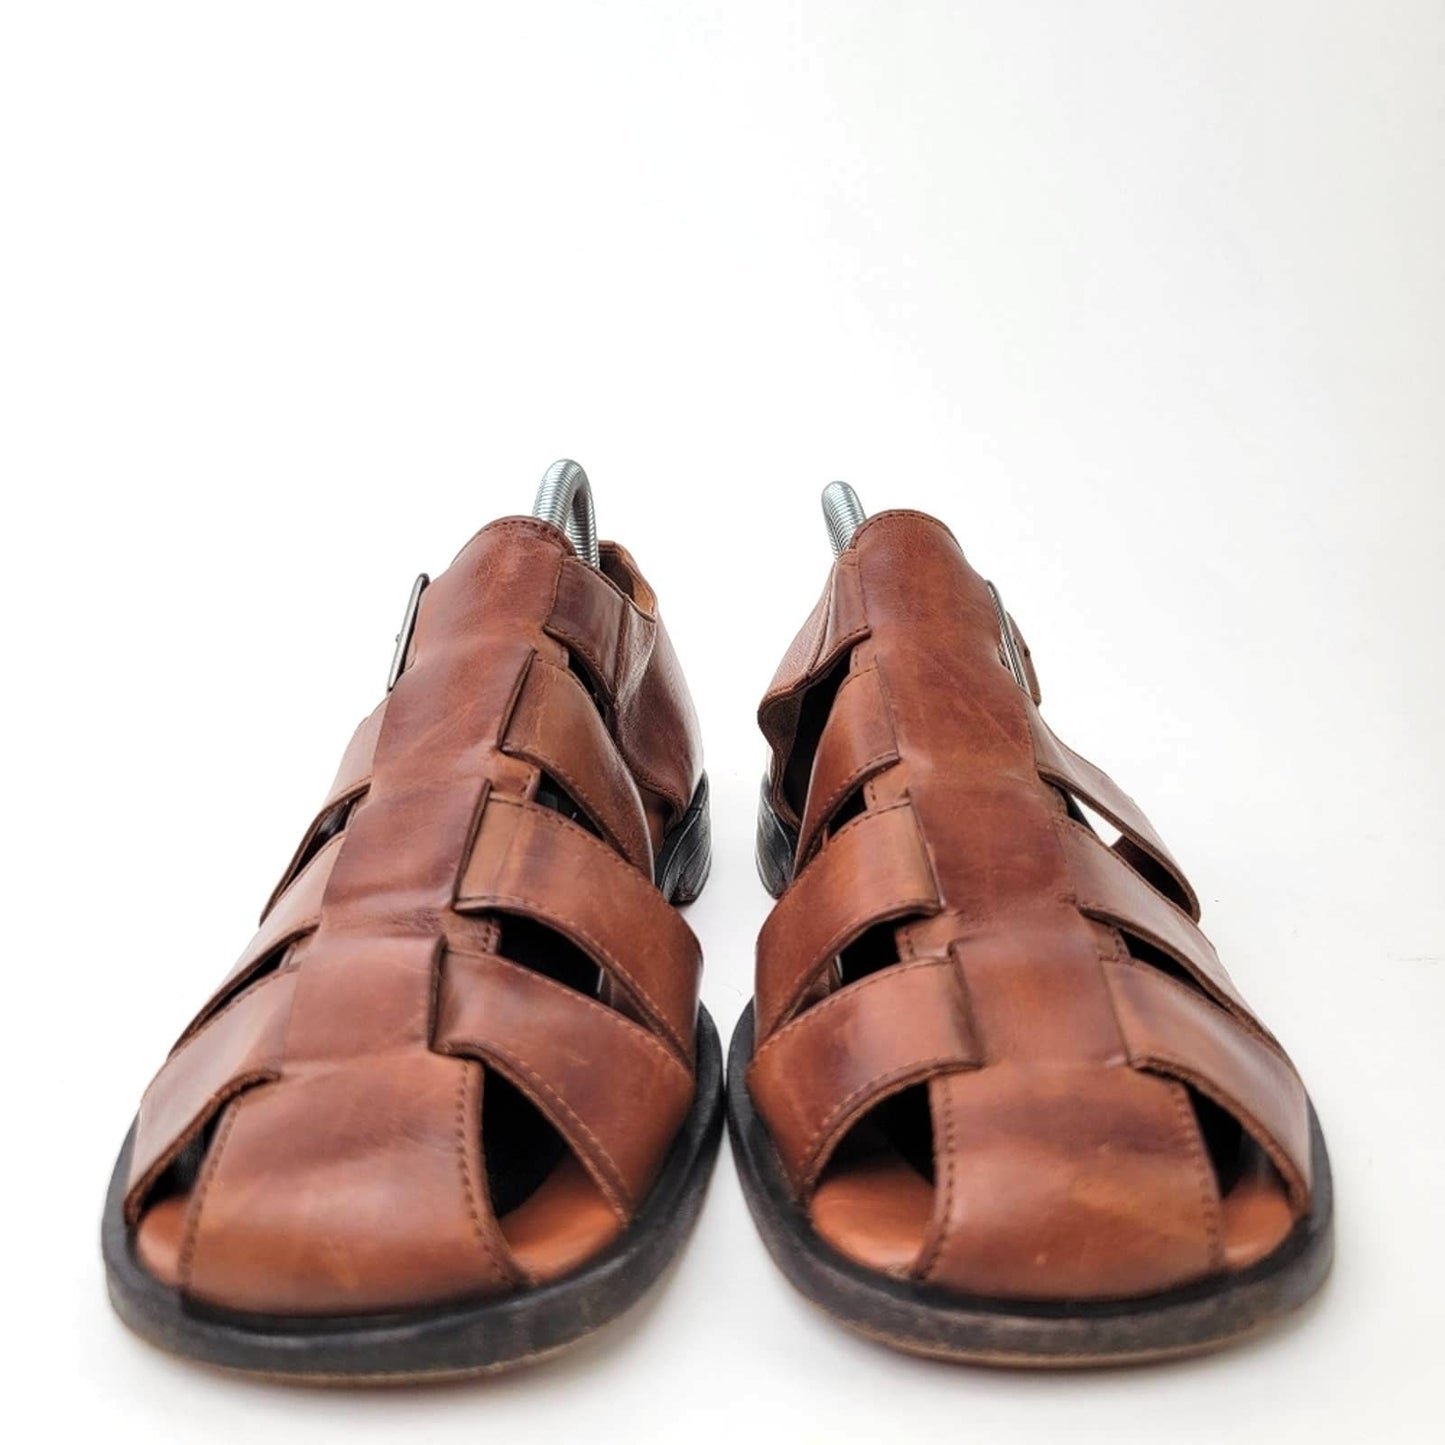 Johnston & Murphy Domani Leather Huarache Fisherman Sandals - 8.5